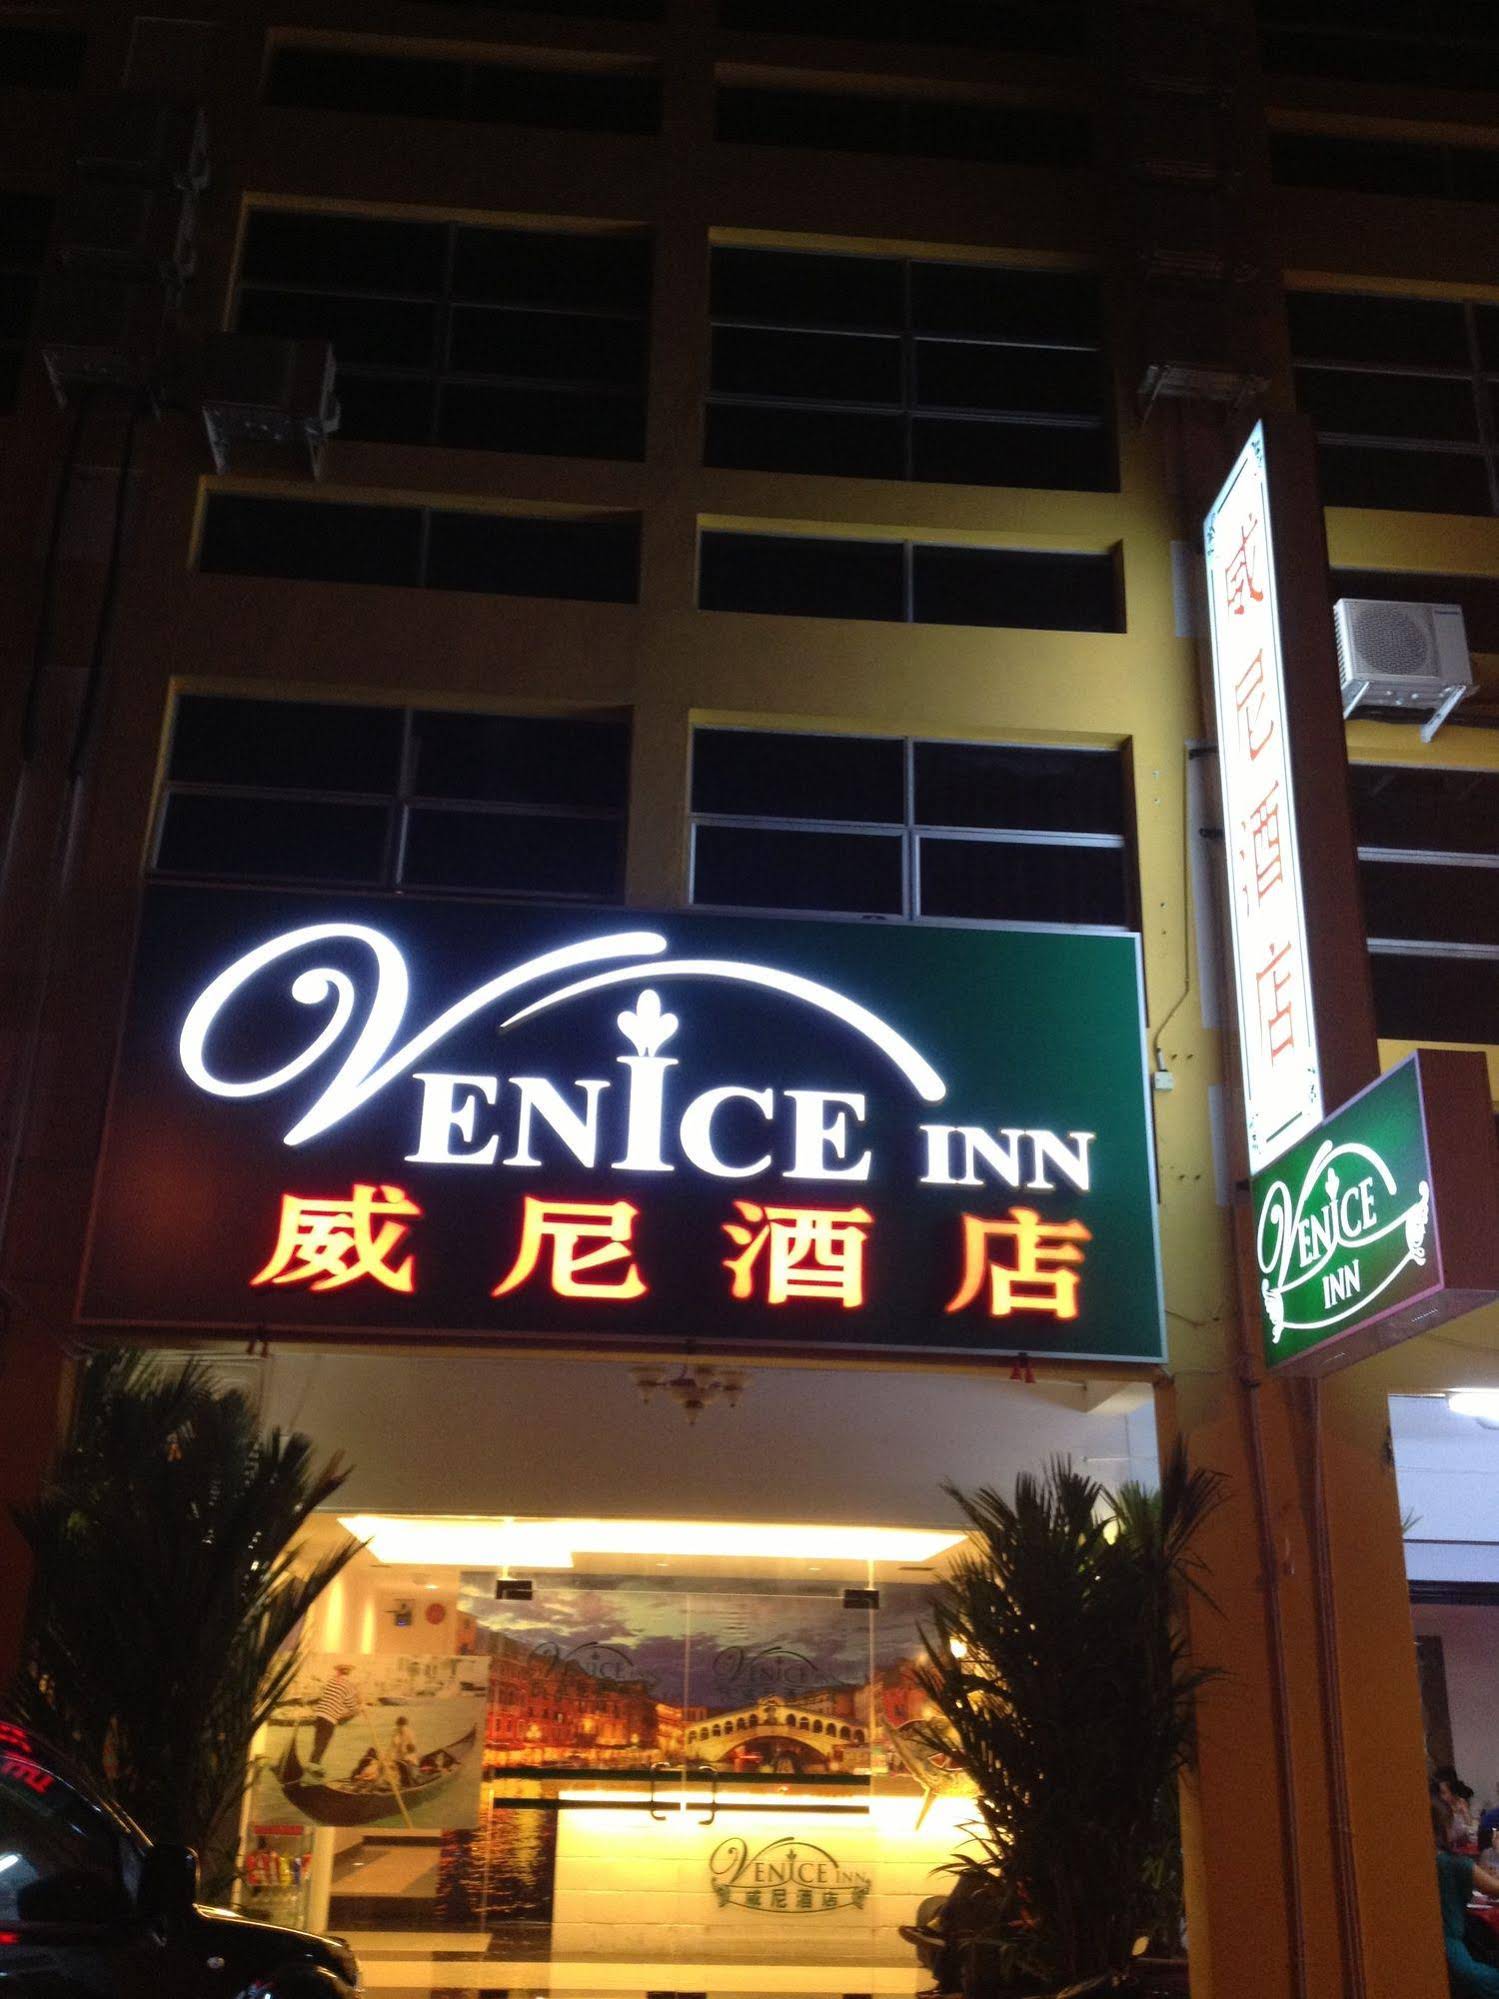 Venice Inn